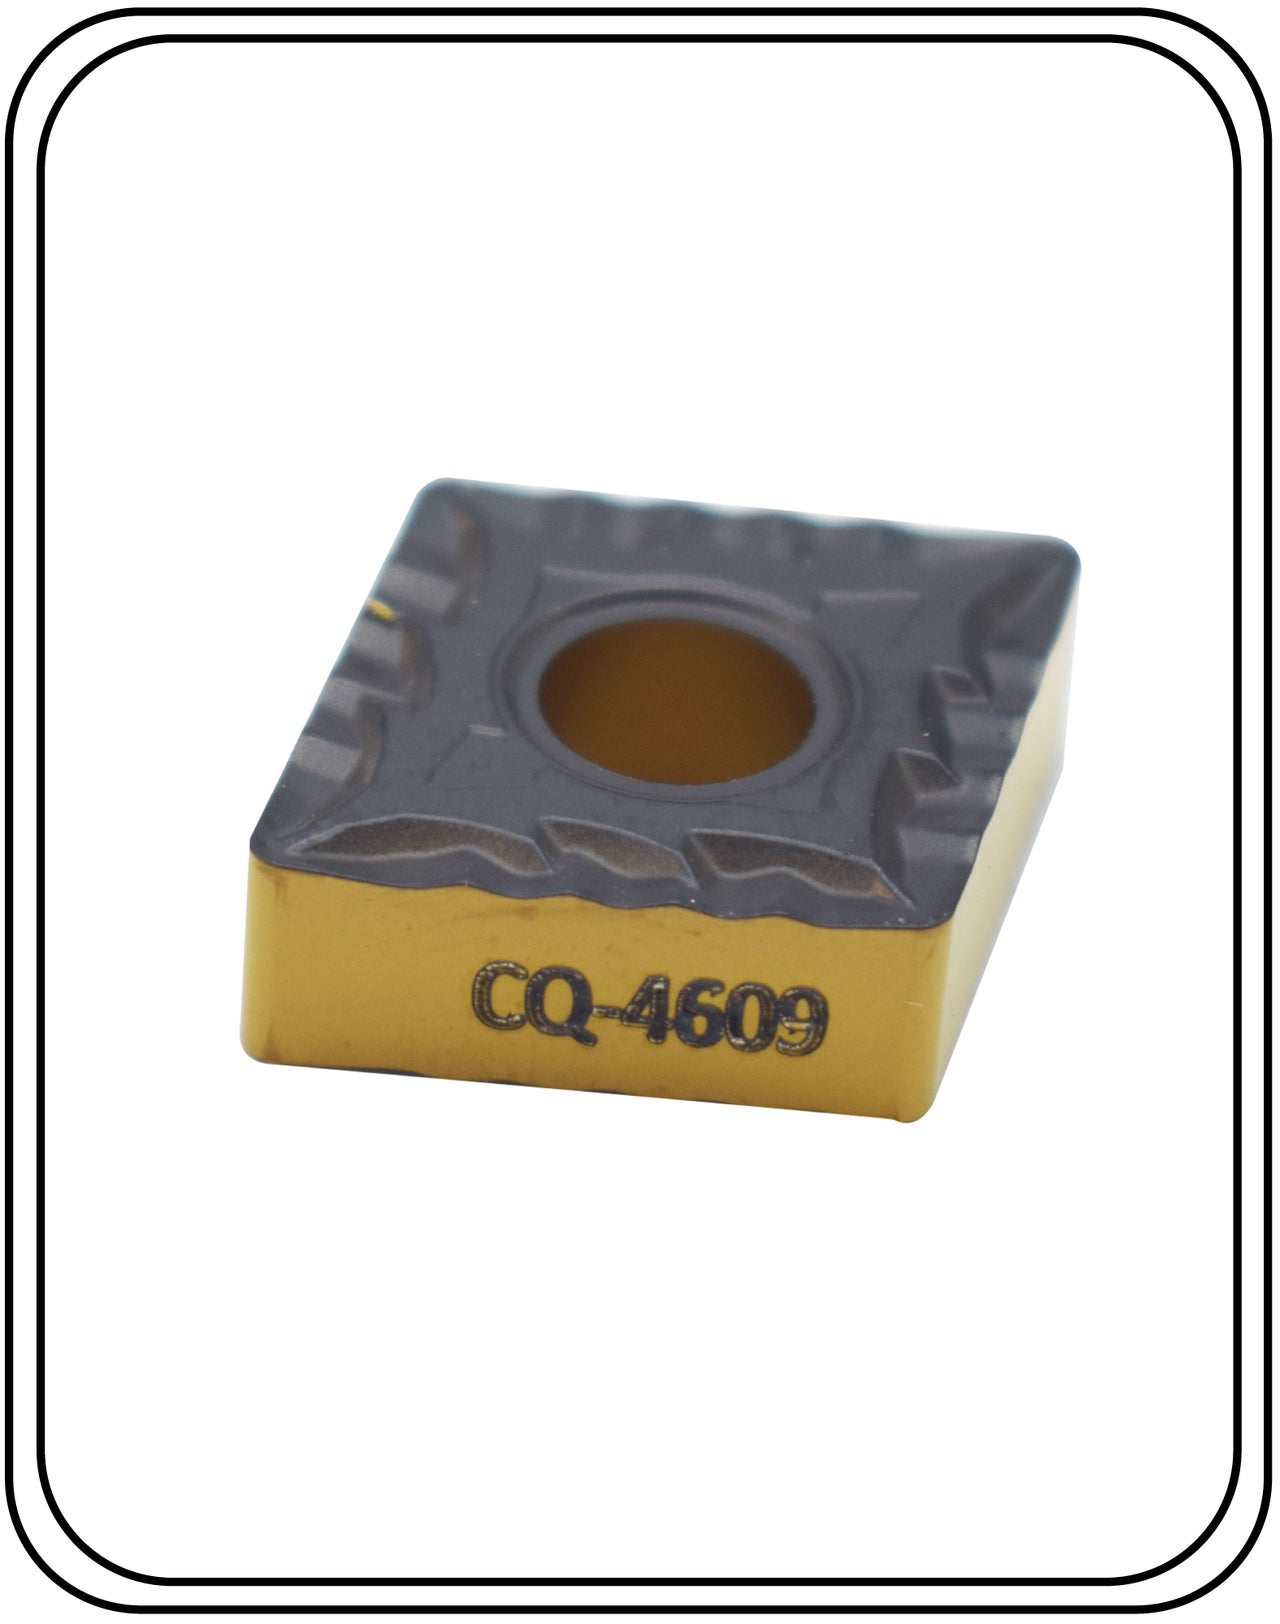 CNMG120408 CQ 4609 Chipbreaker insert